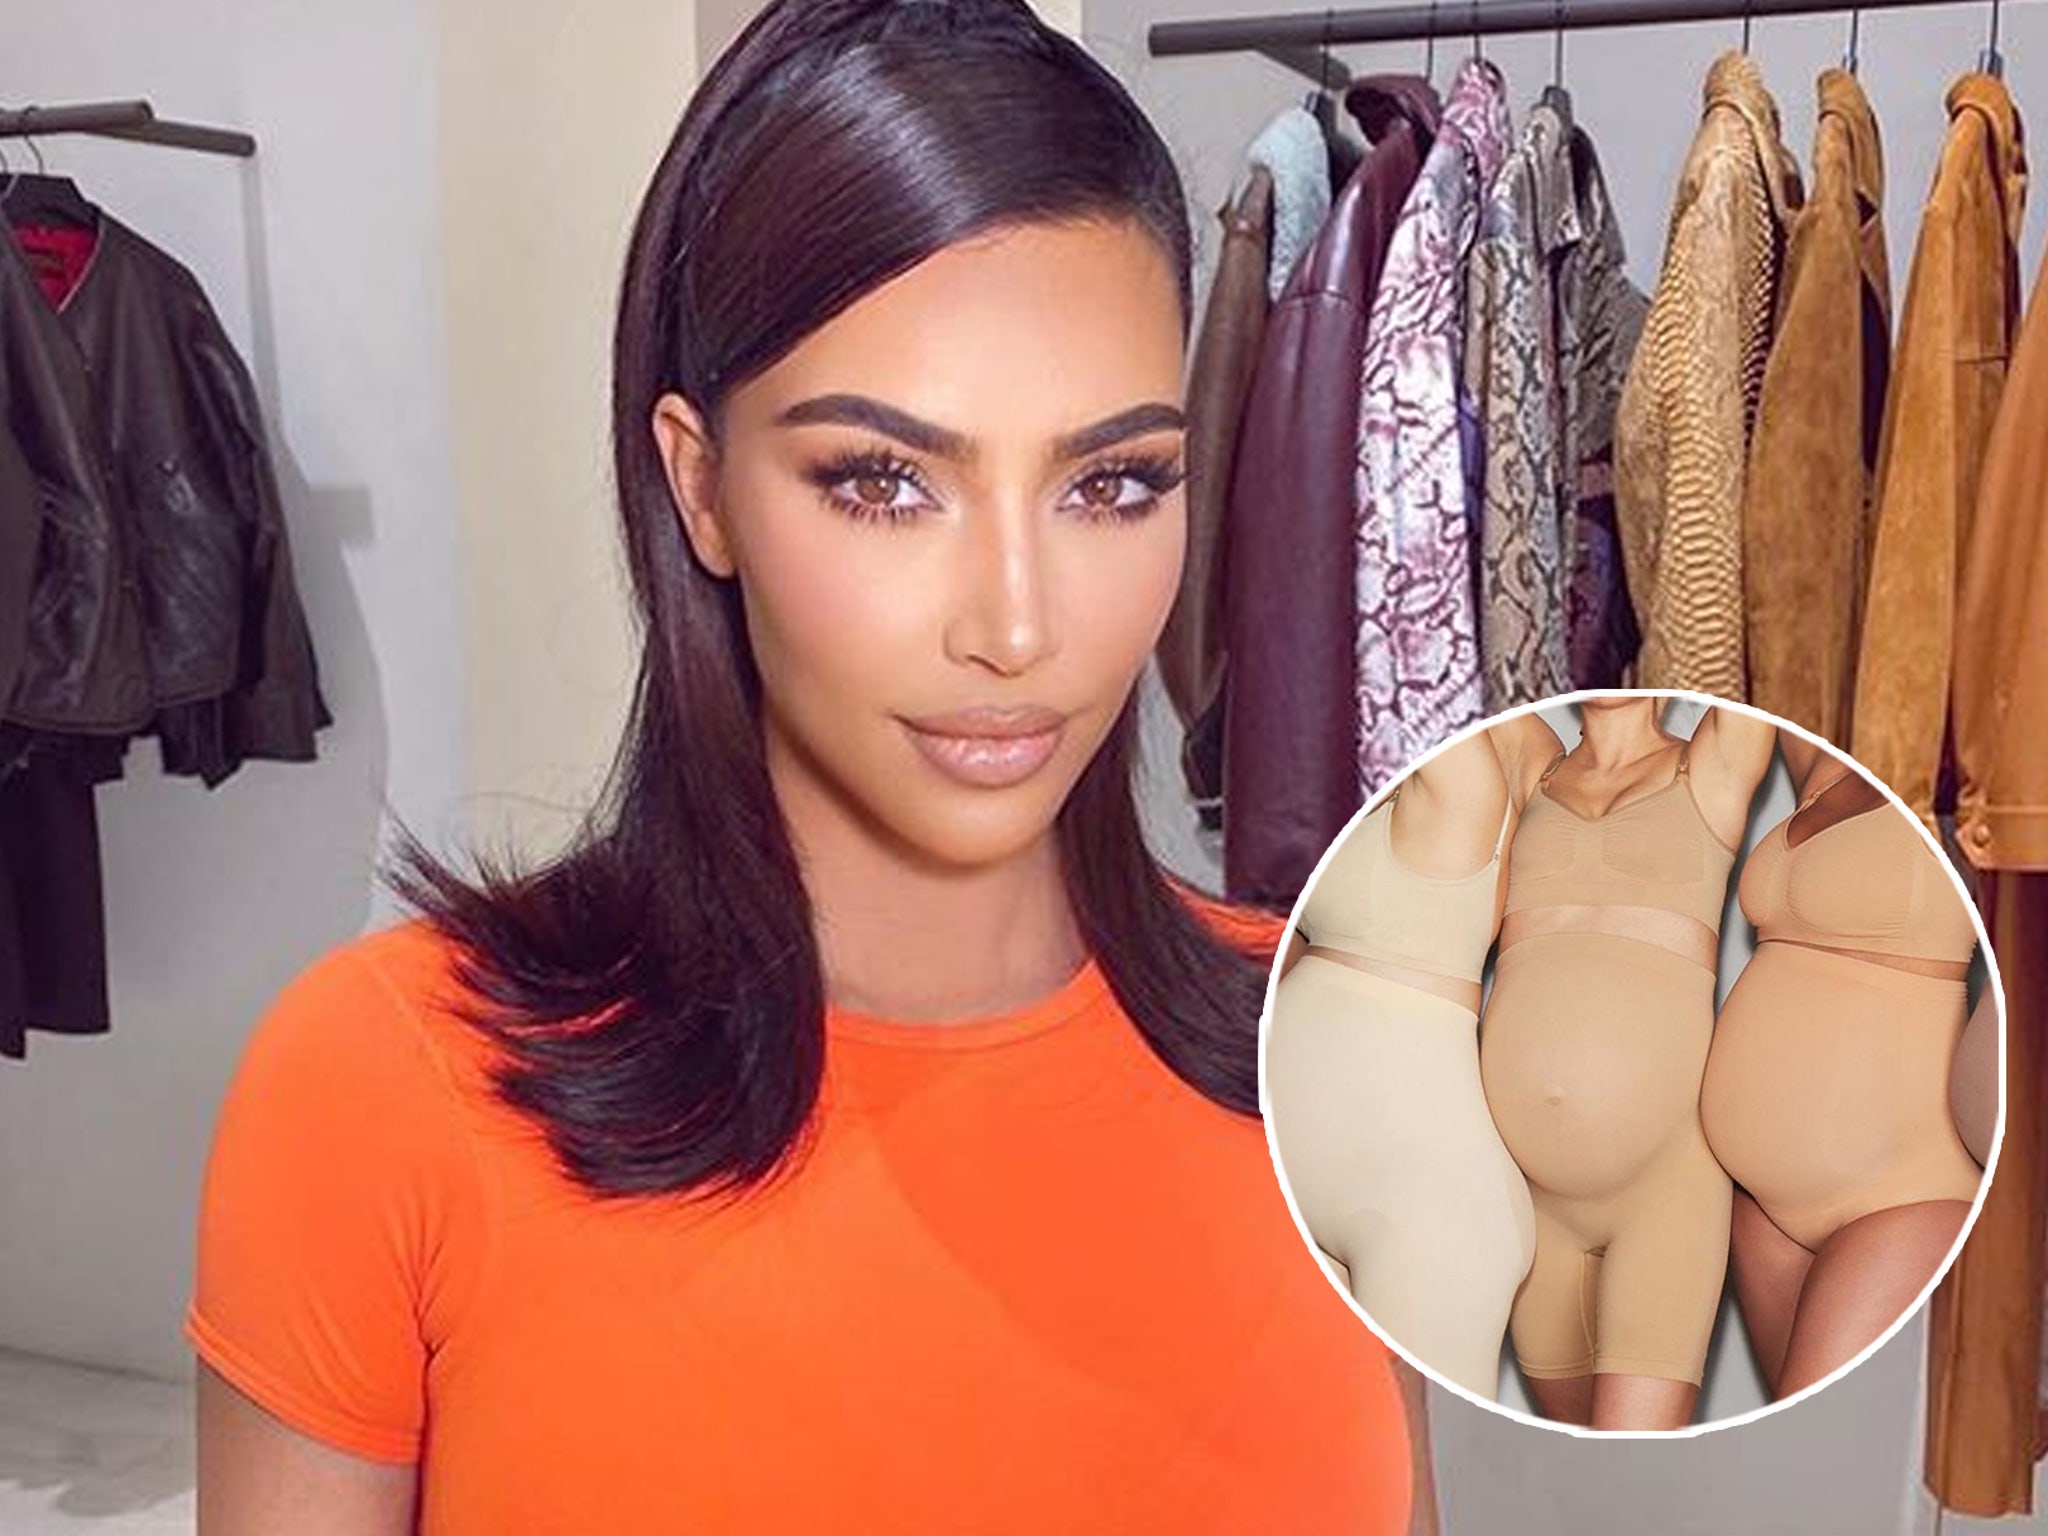 HONEST Review of Kim Kardashian's SKIMS Maternity Solutionwear